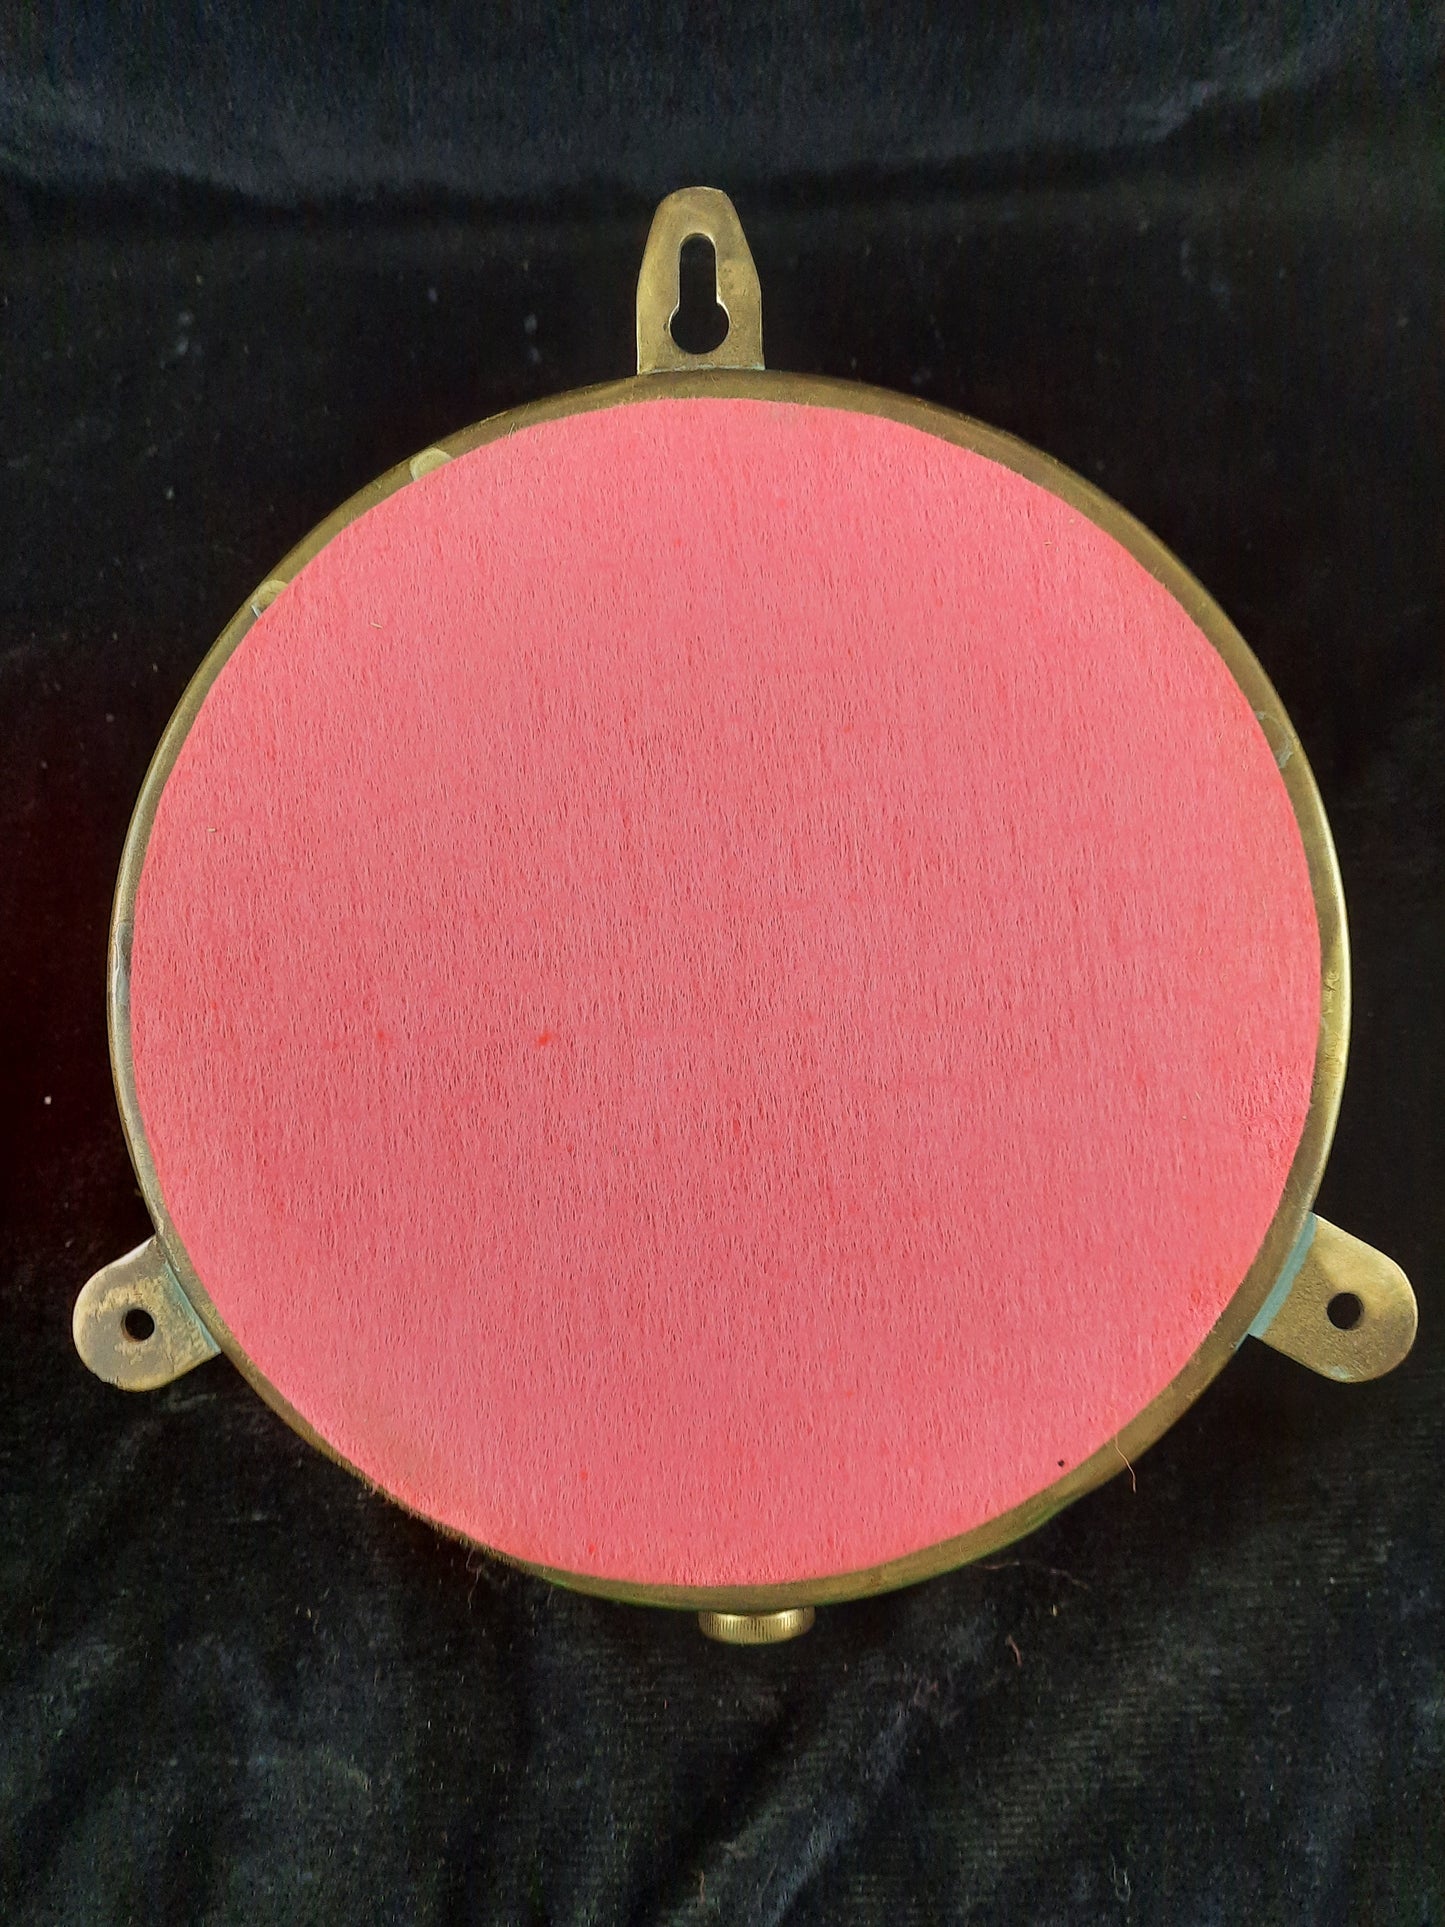 Clinometer - Brass (Inclinometer-Marine Bulkhead)